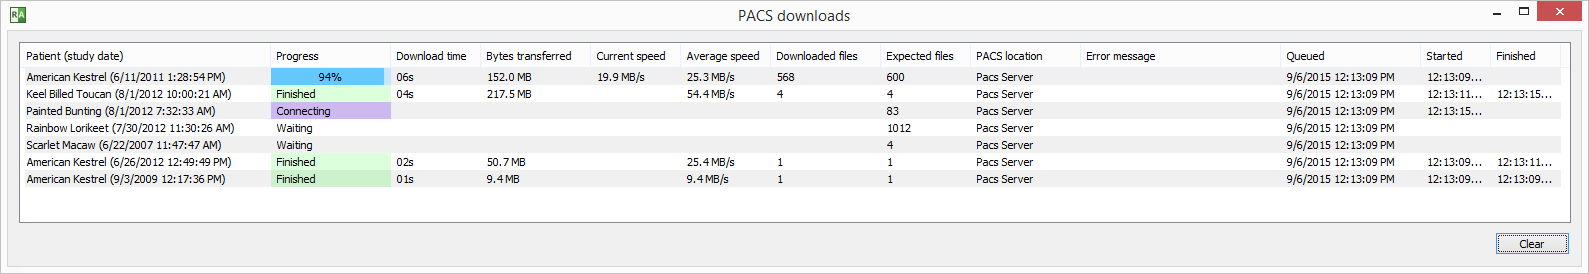 RadiAnt_DICOM_Viewer_PACS_download_list